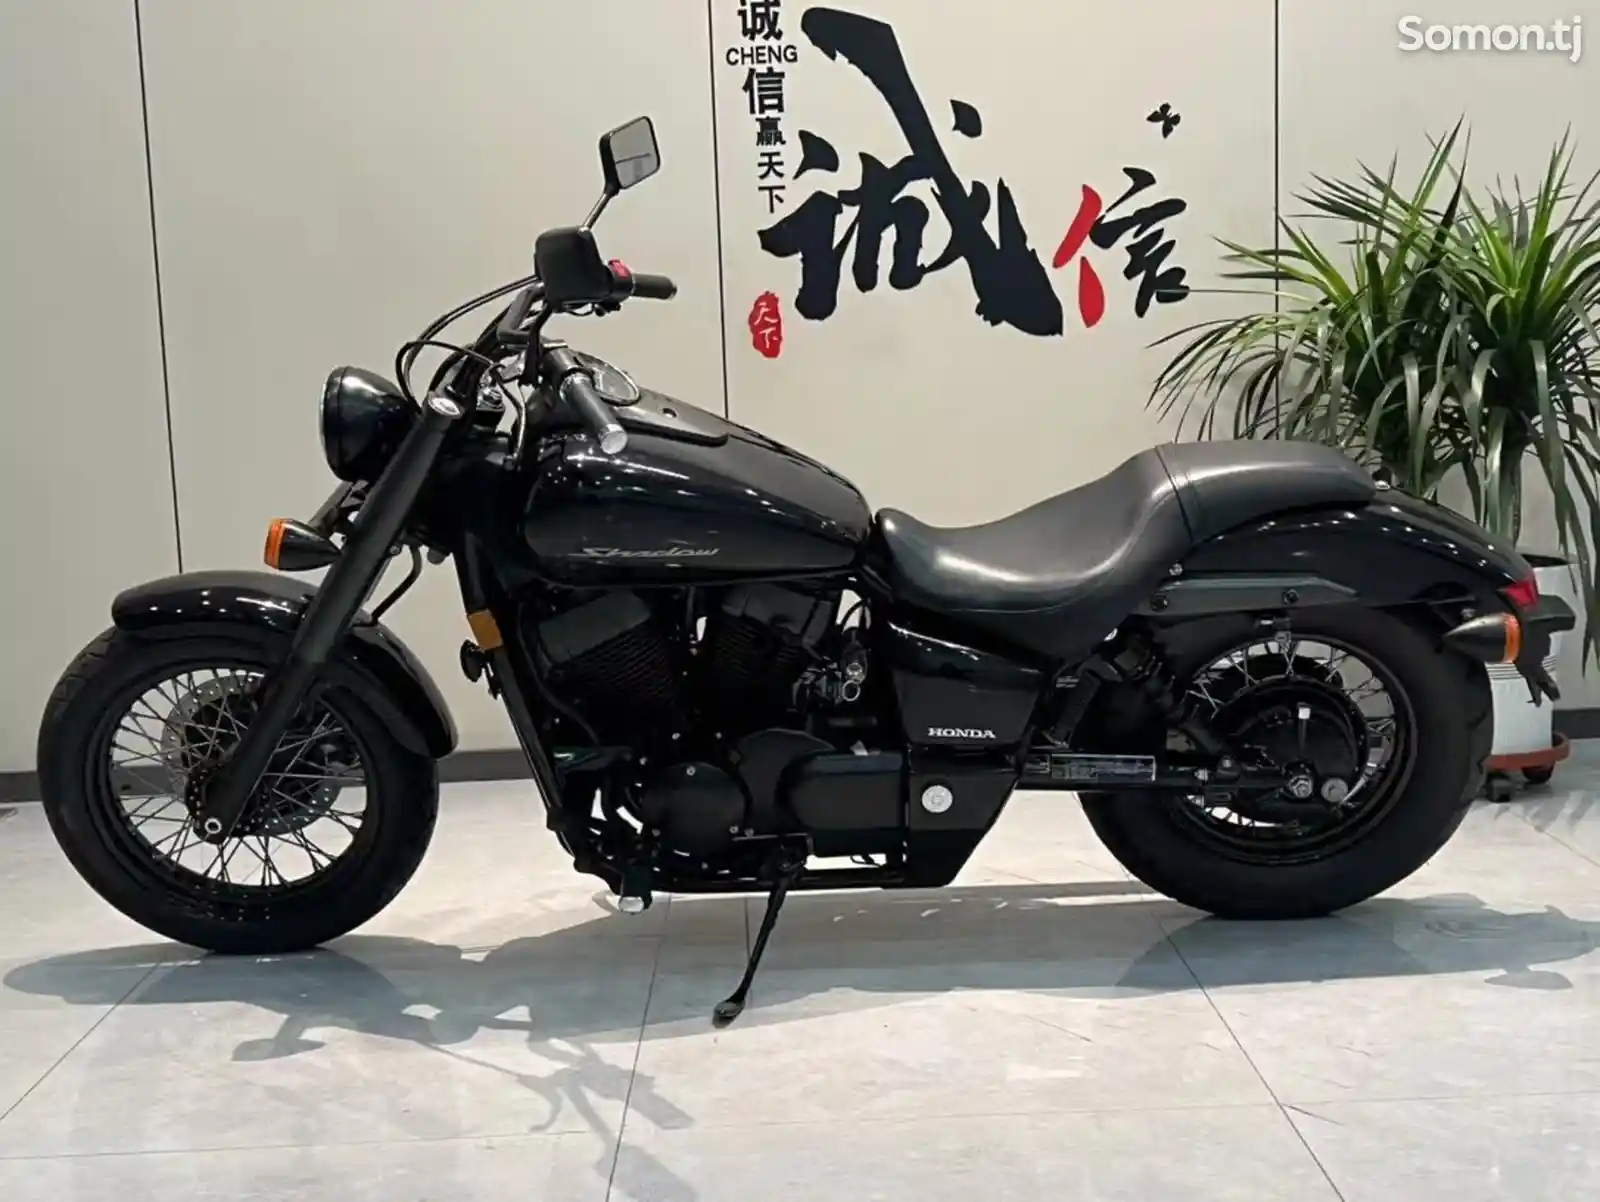 Мотоцикл Honda Shadow VT750cc на заказ-2